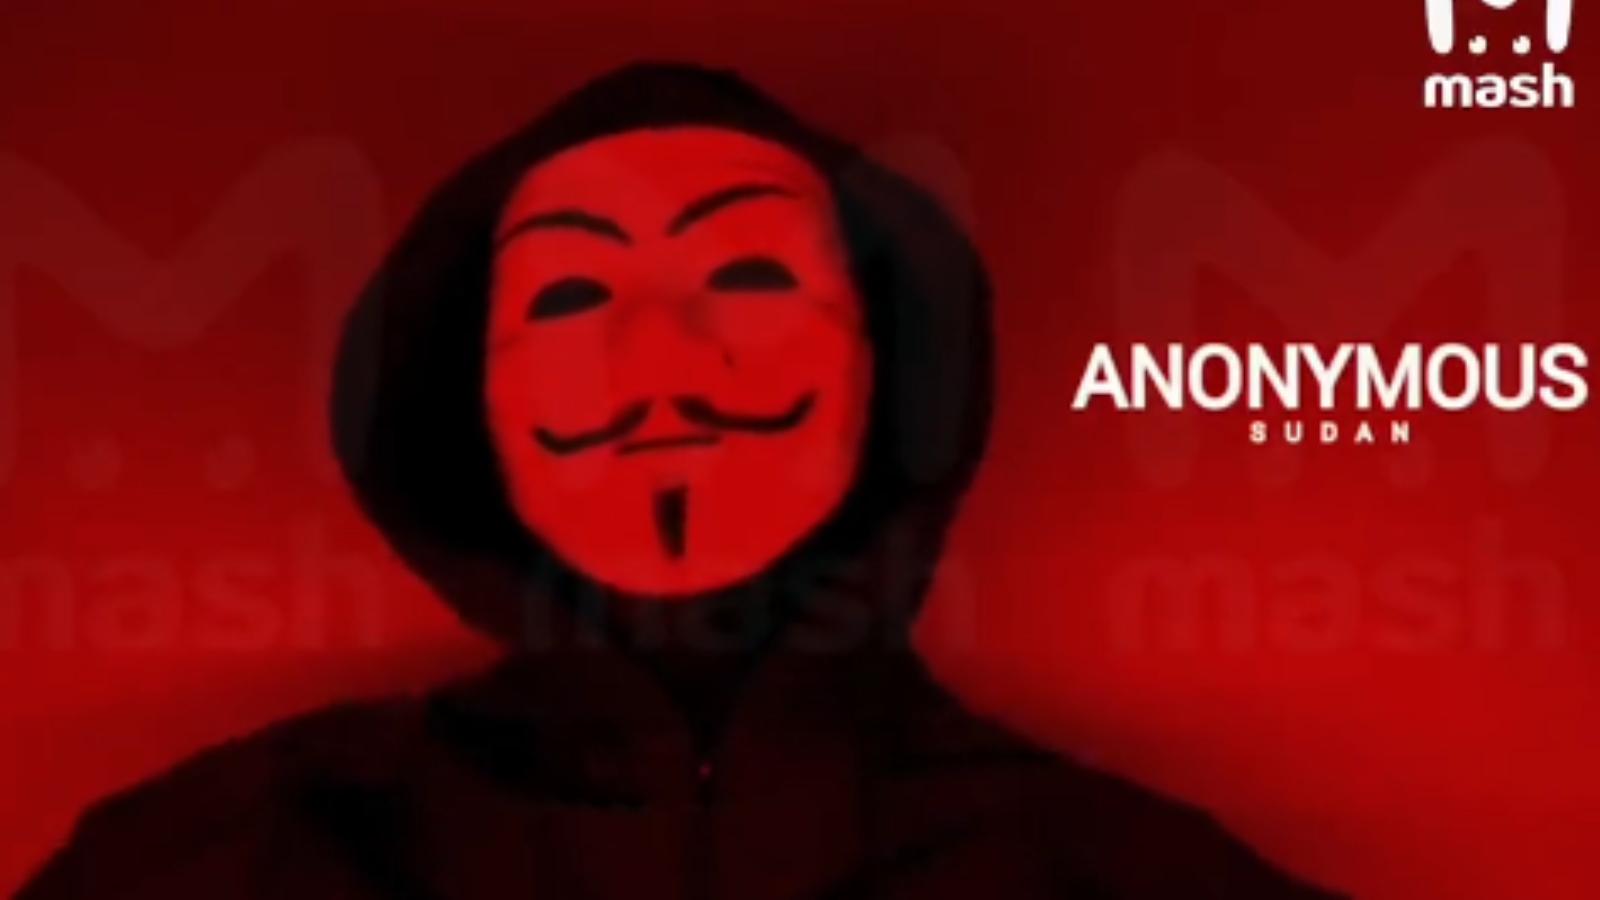 hacker threat by anonymous sudan